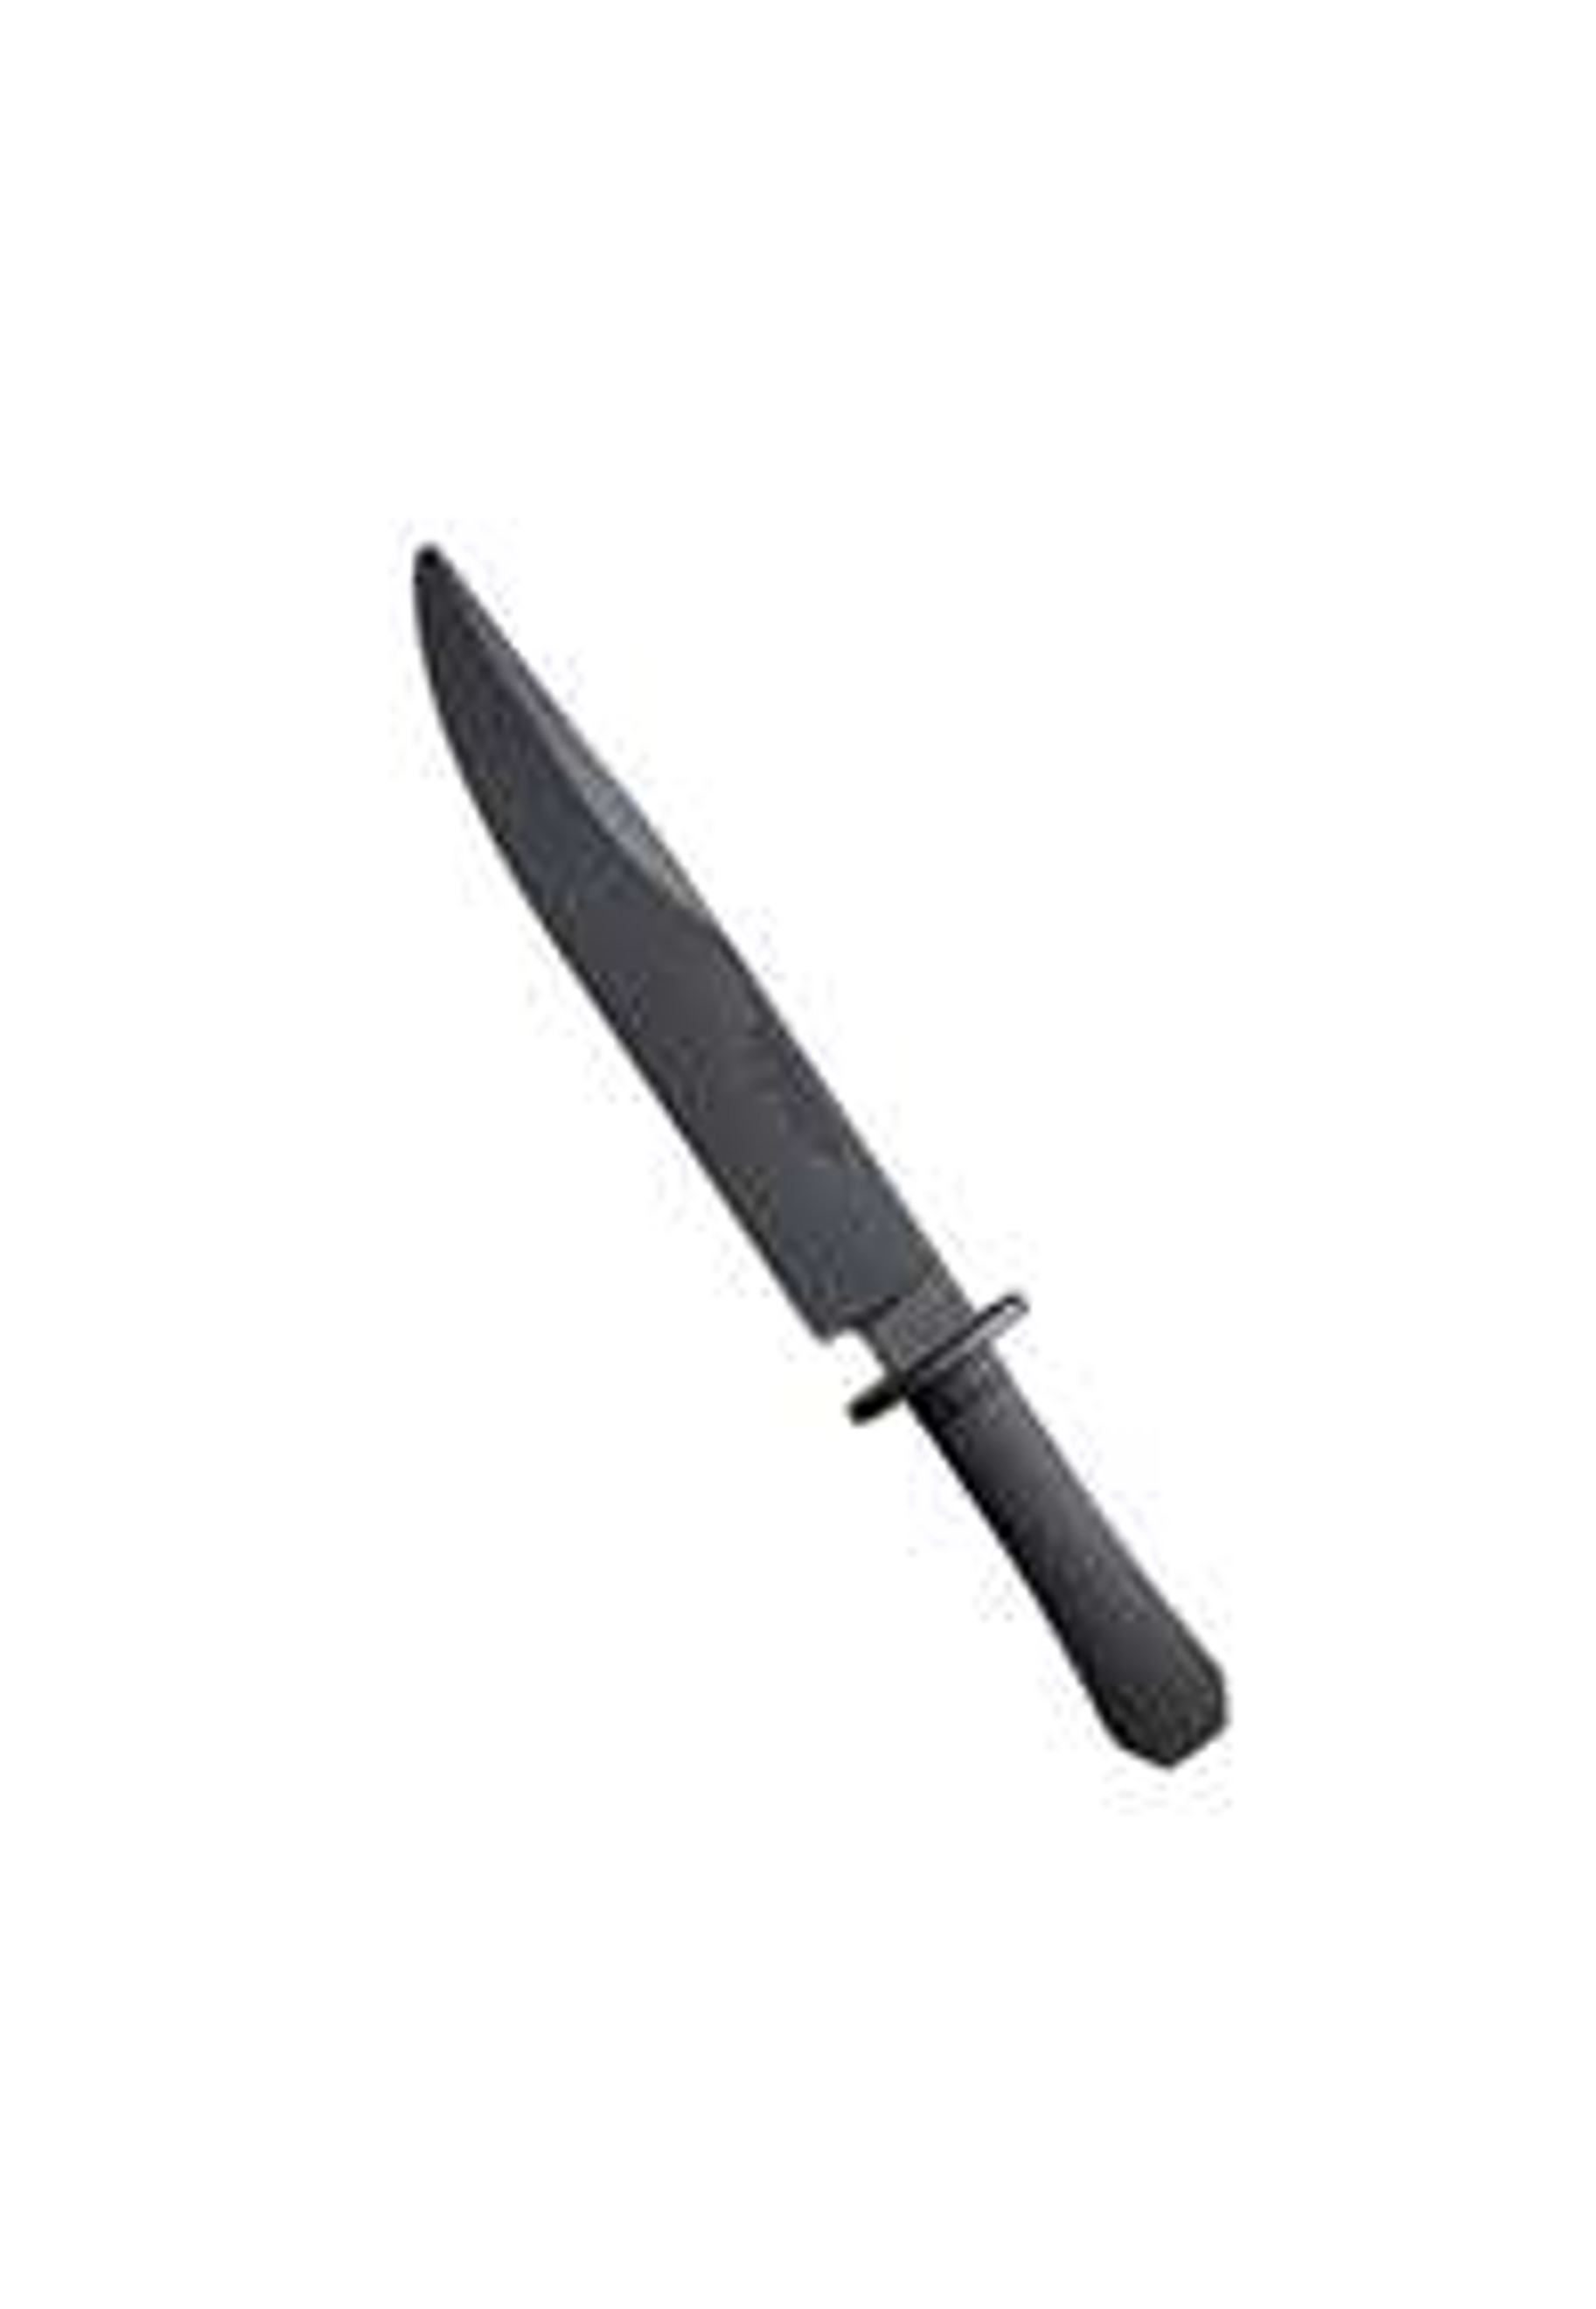 Cold Steel Rubber Training Laredo Bowie Knife